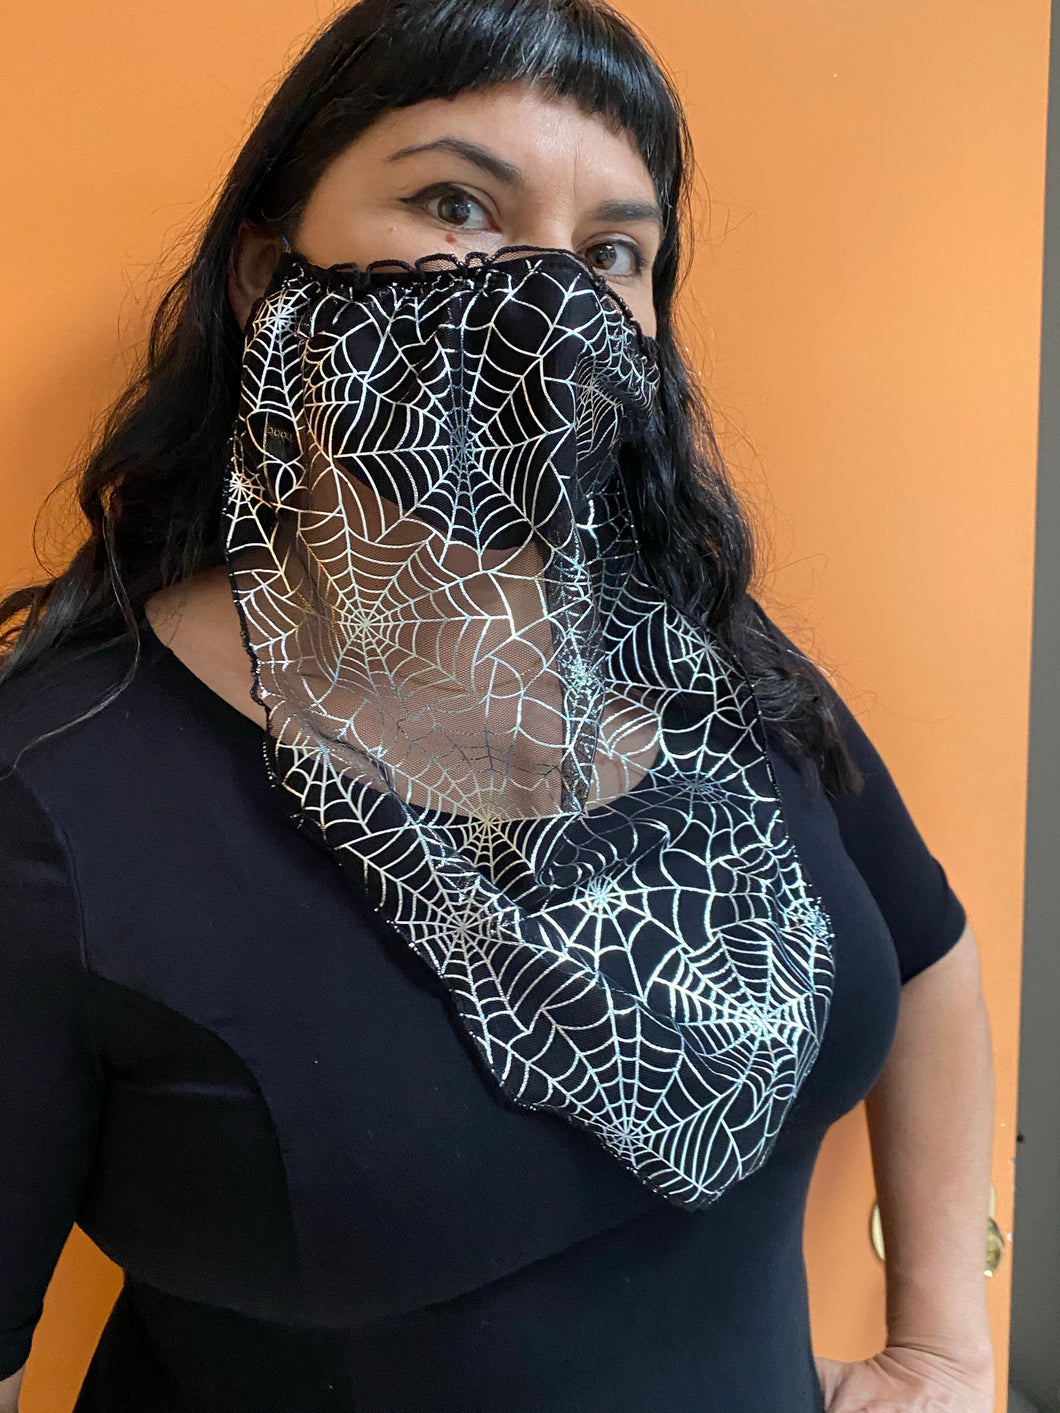 SALE! La Arana Spider Web Face Mask Veil and Mask